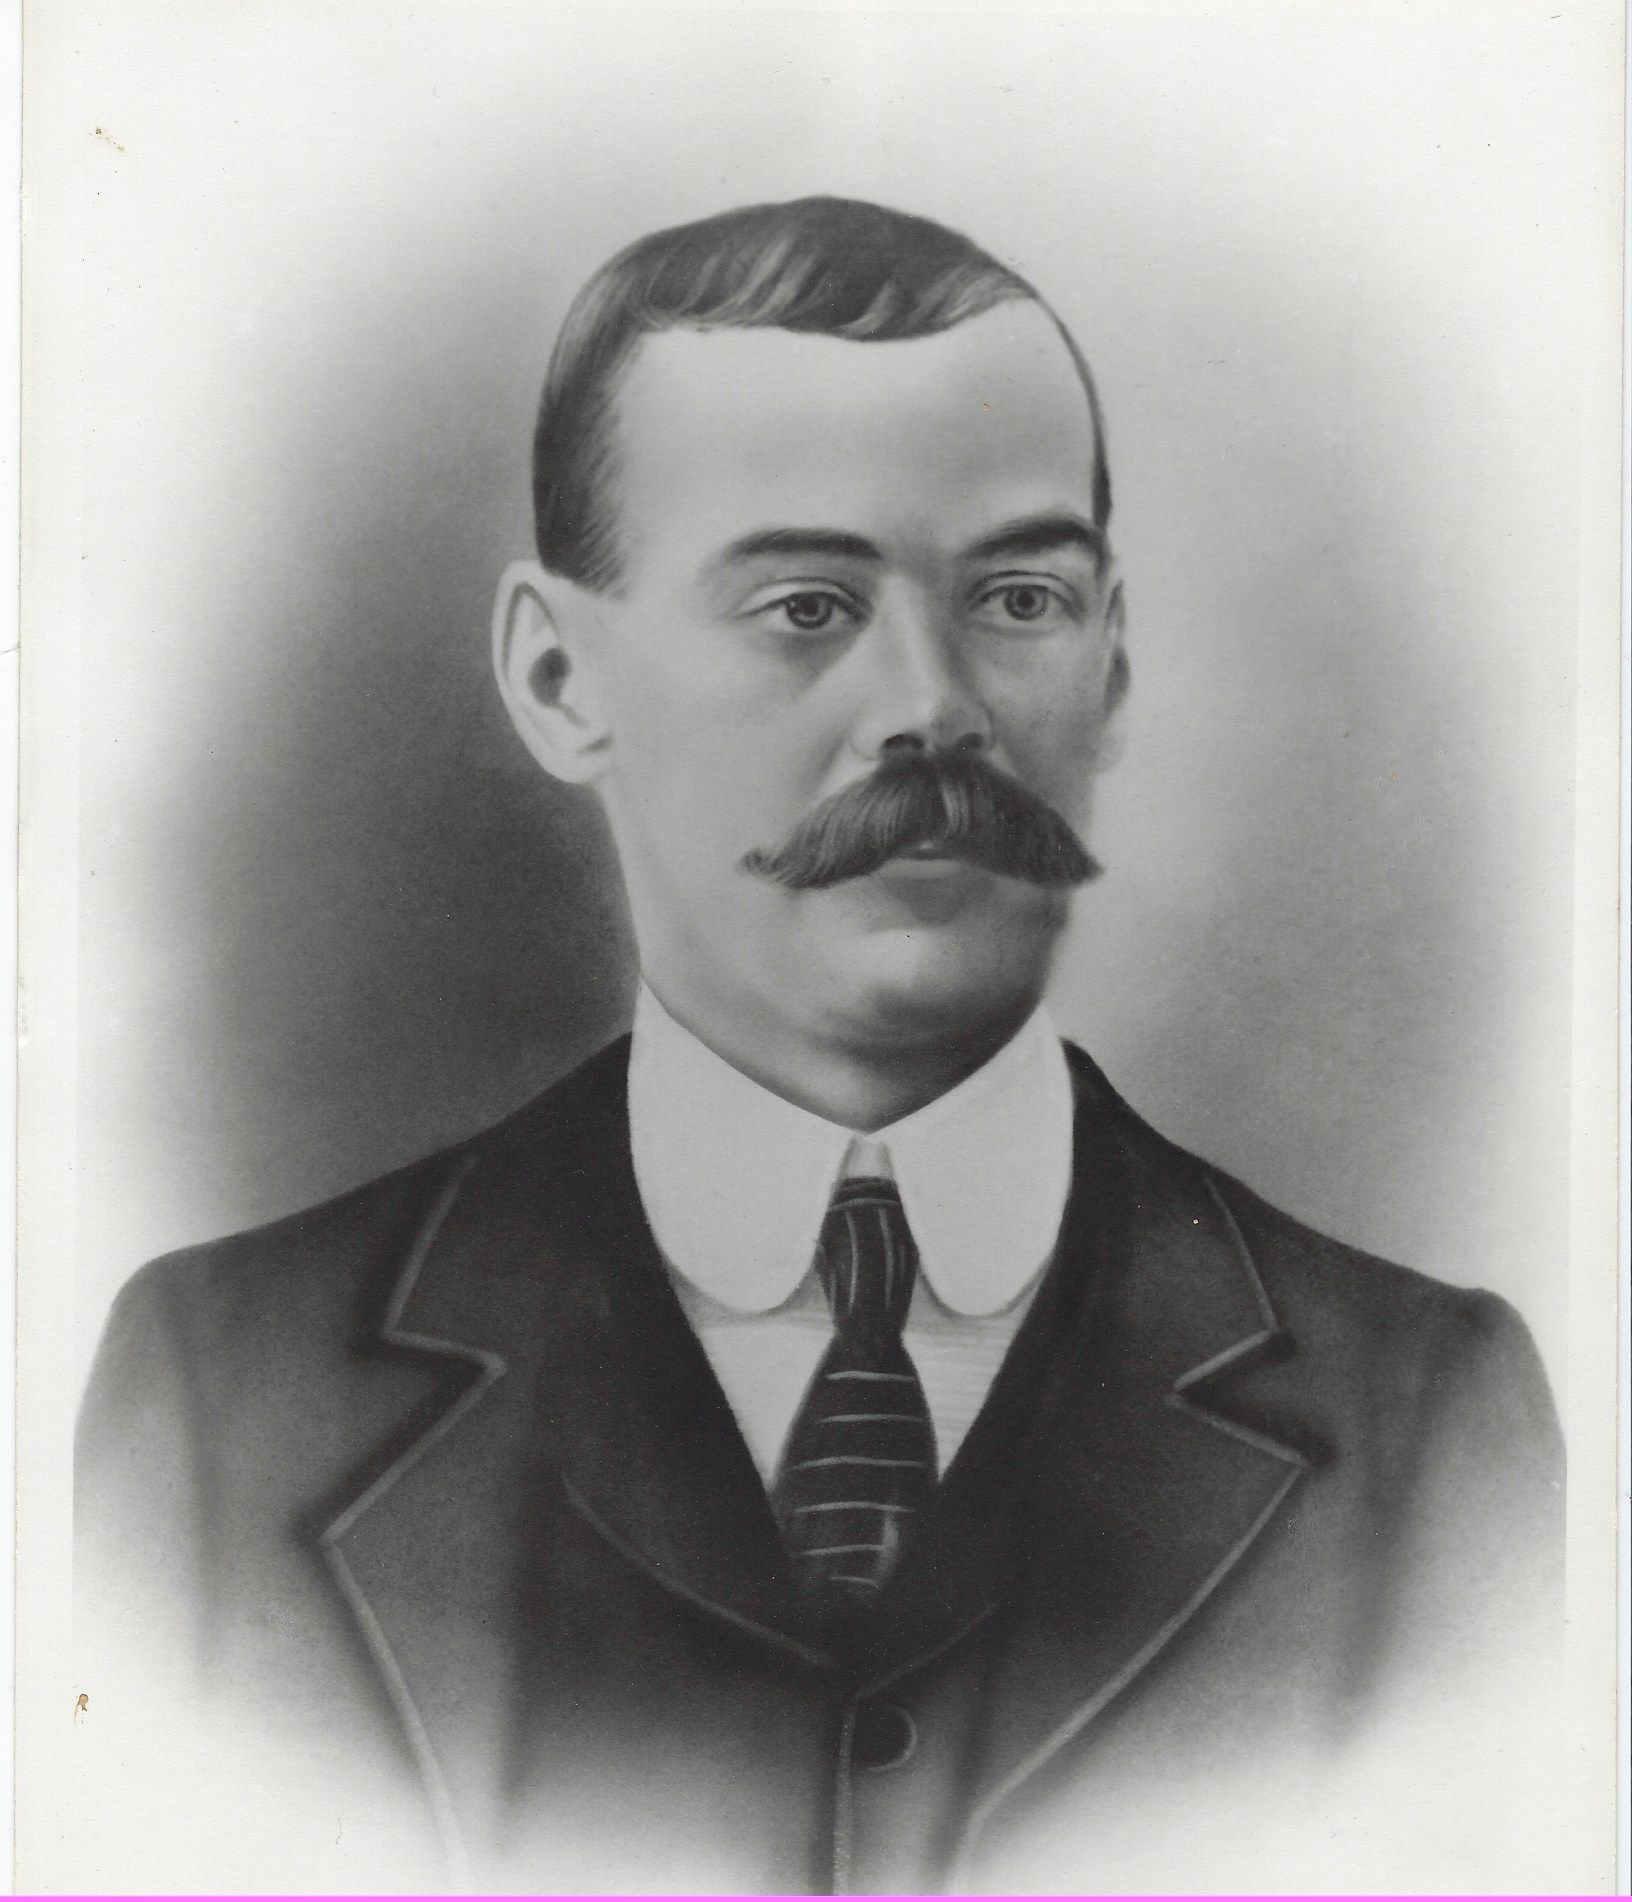 John M. Portrait